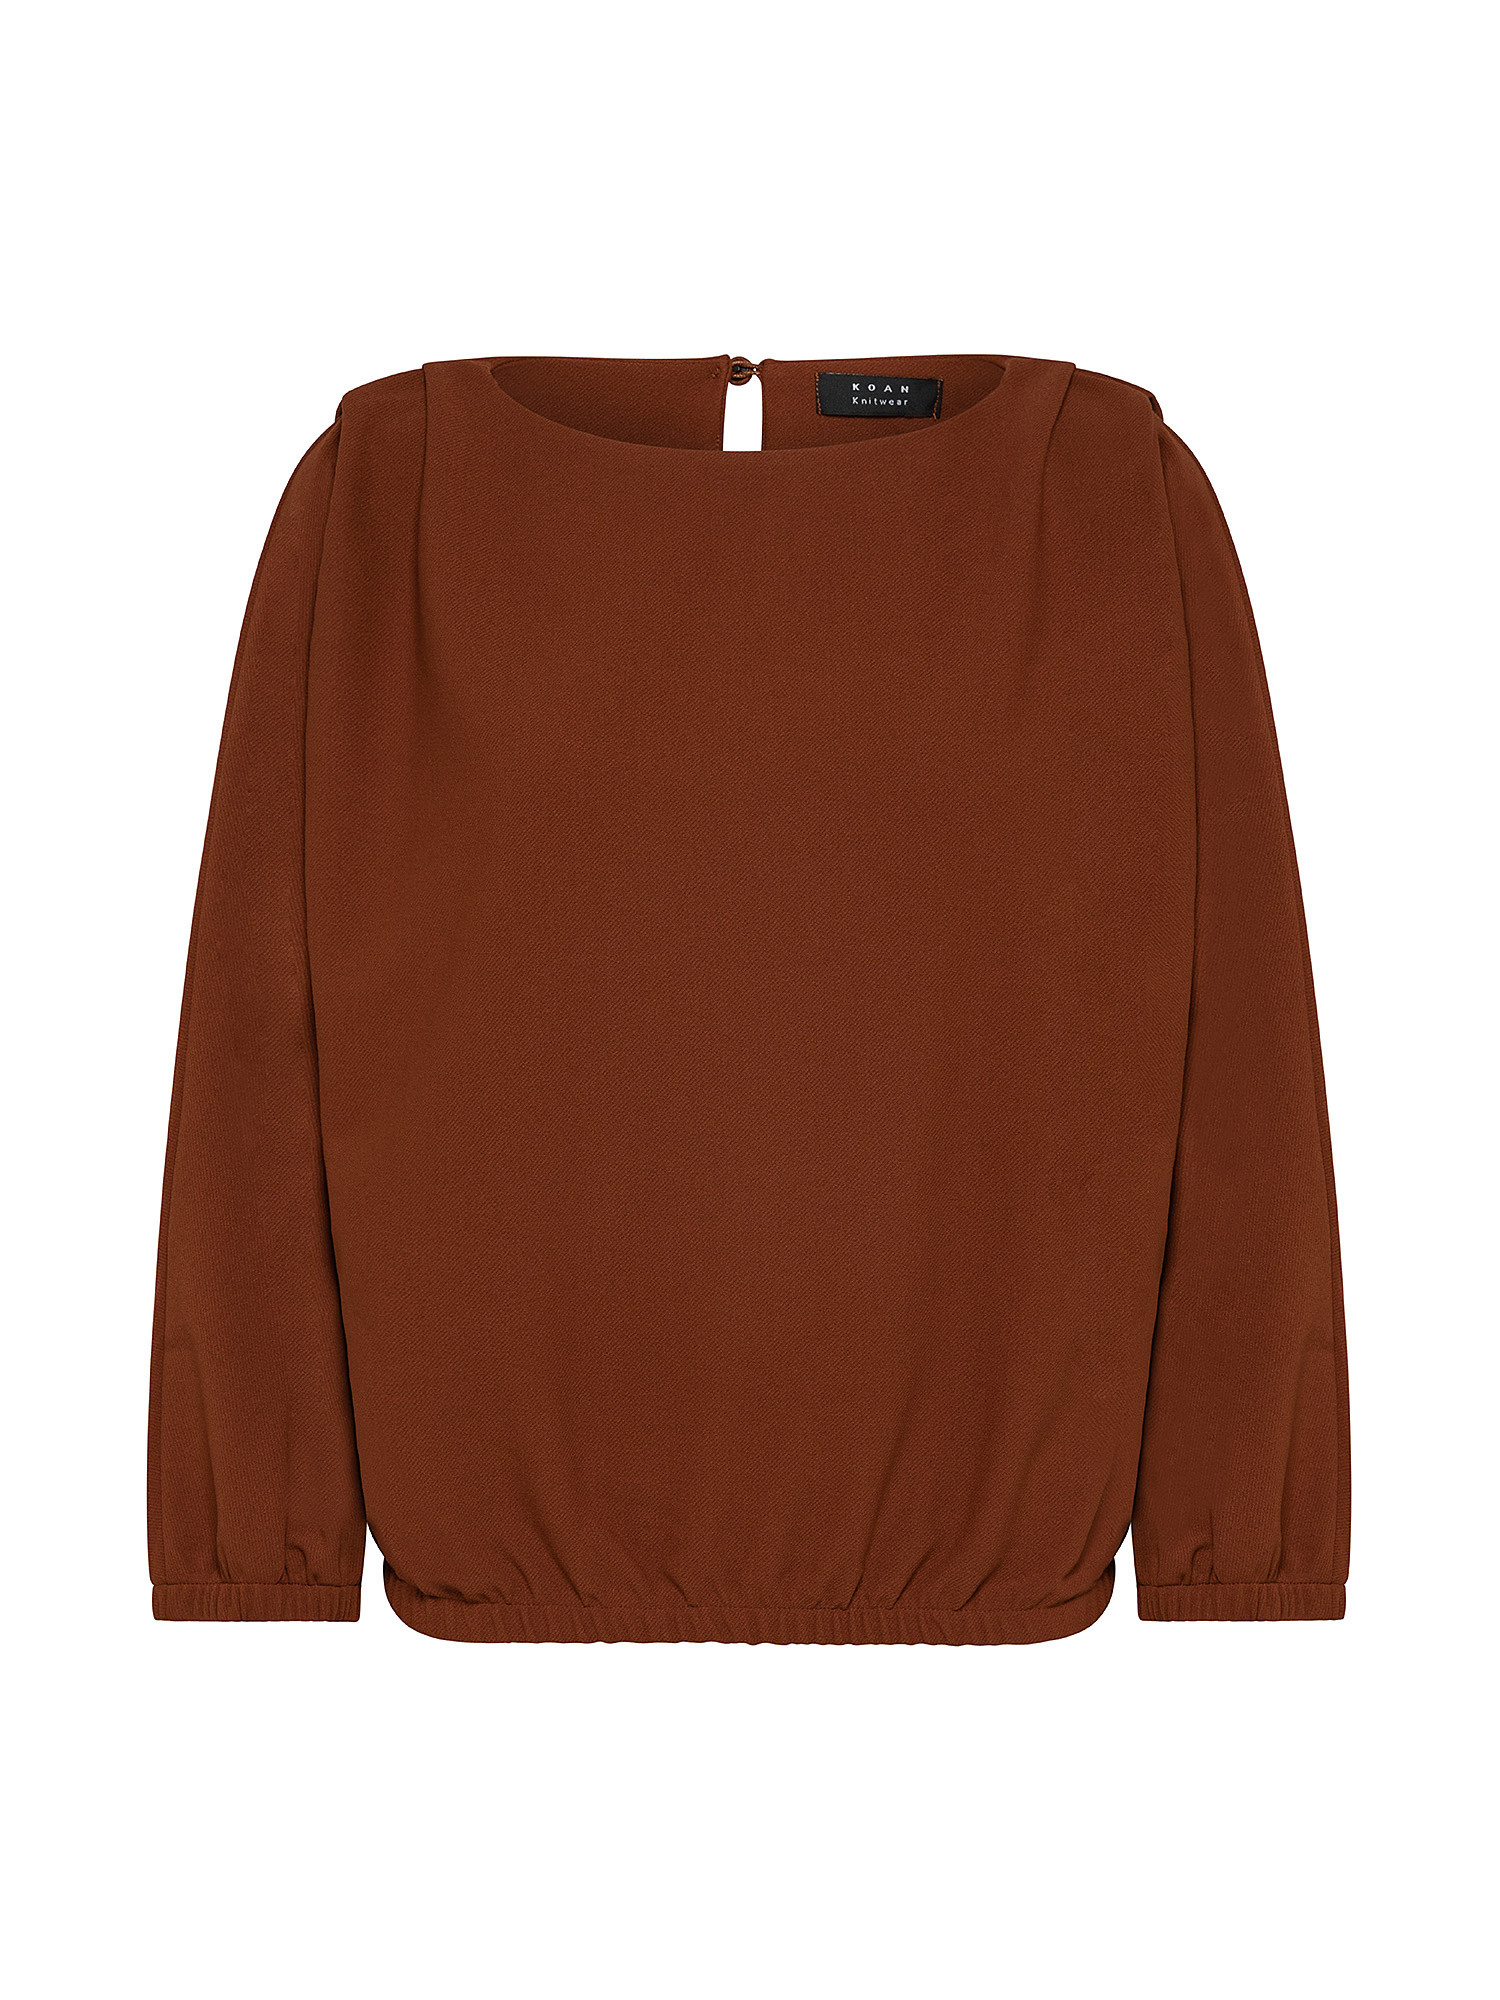 Kimono T-shirt, Light Brown, large image number 0